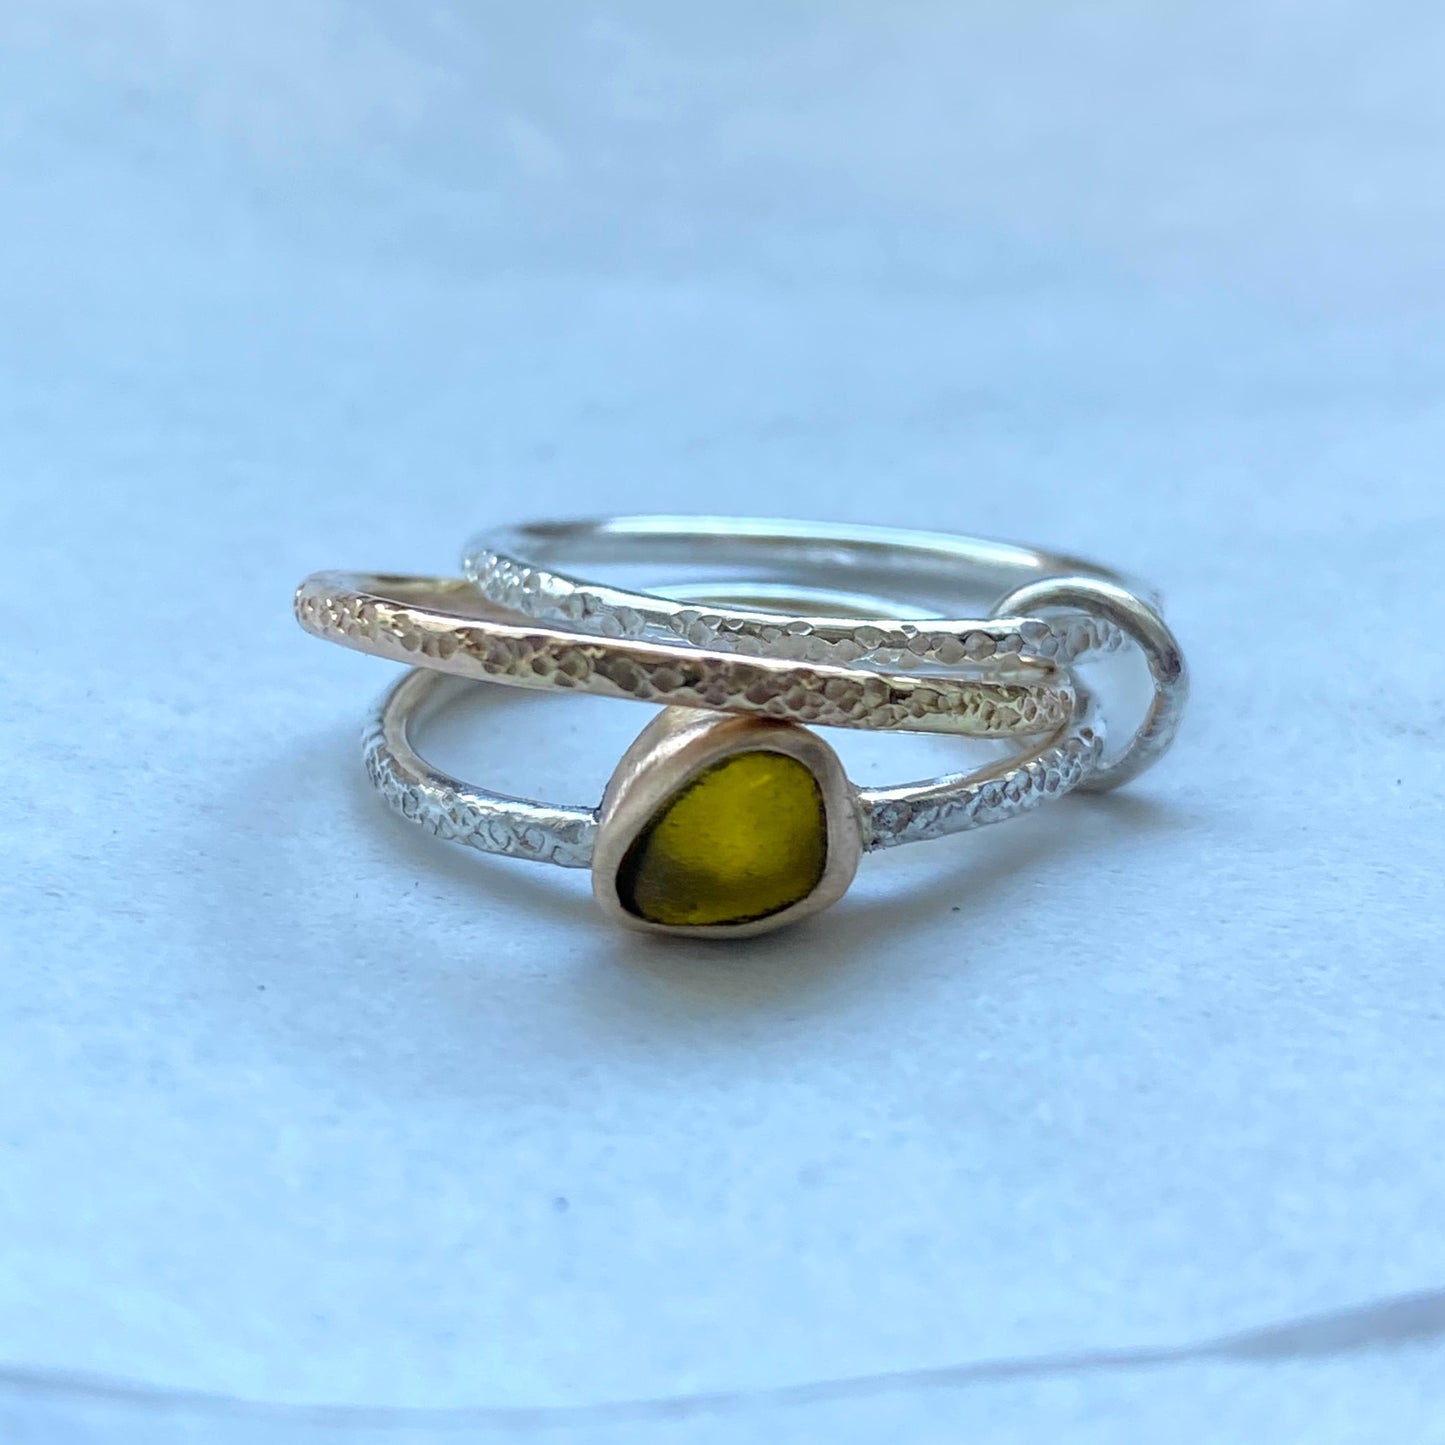 Ternion Tides Sea Glass Ring